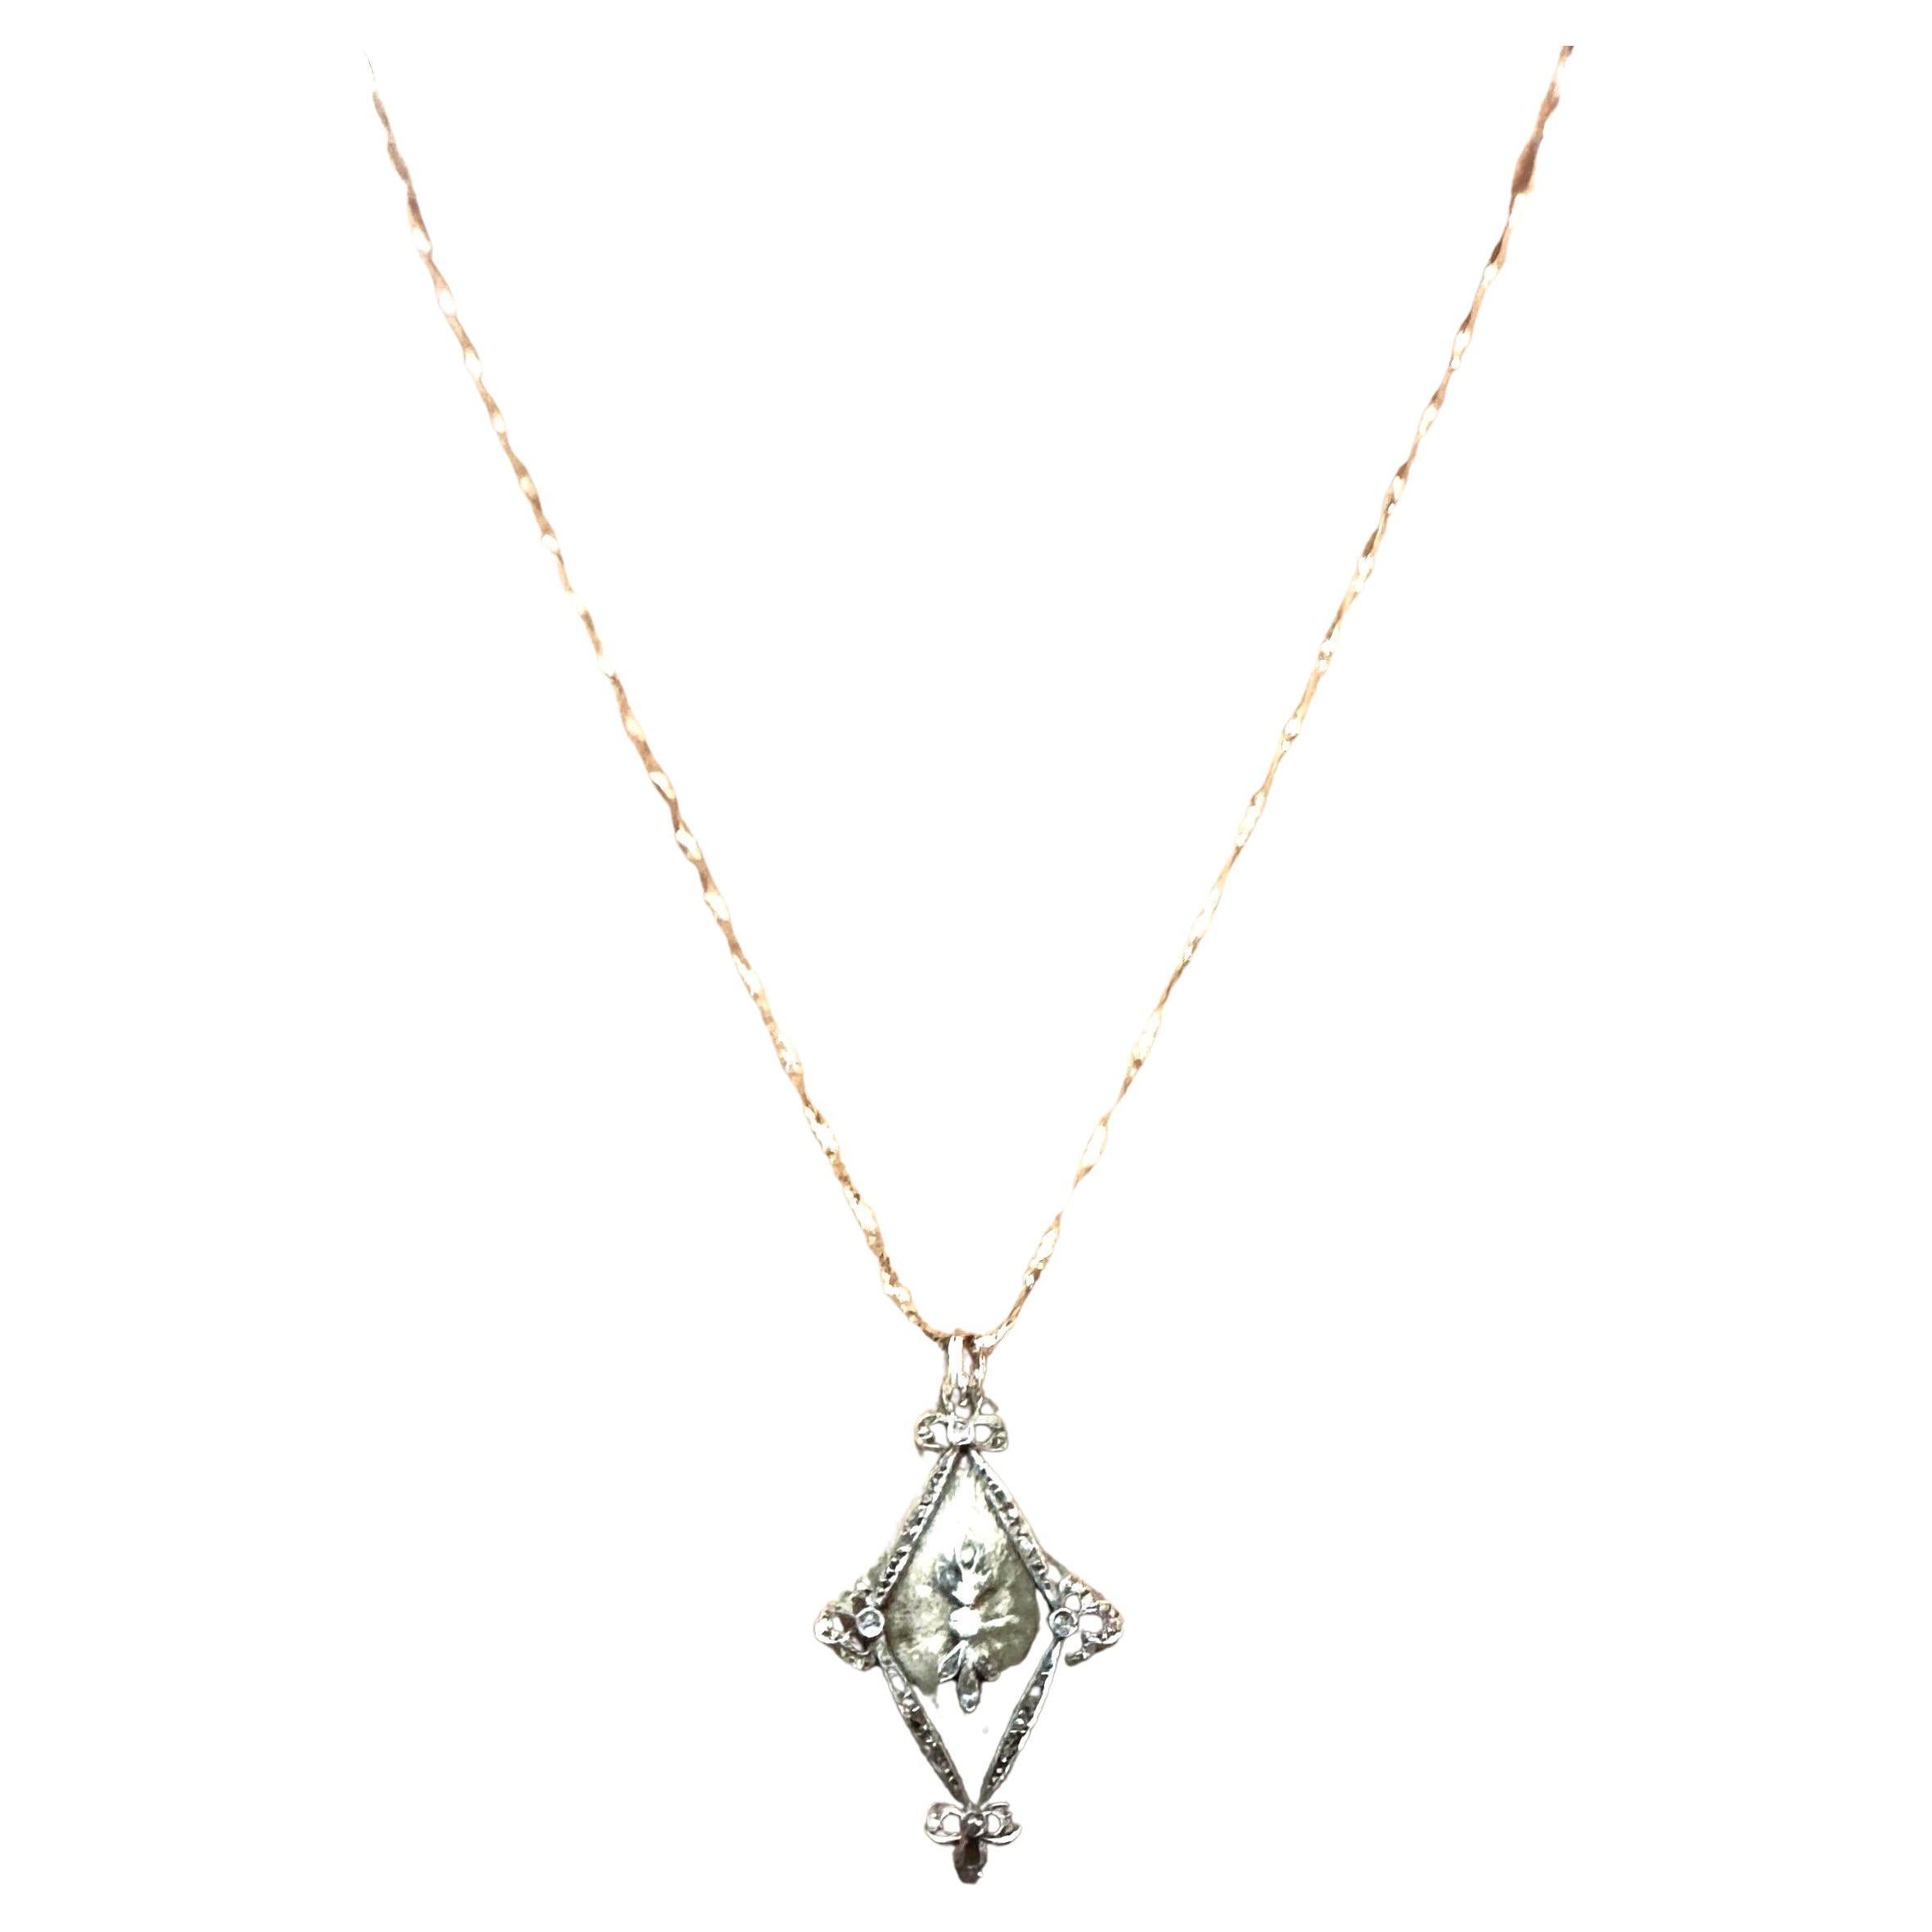 Antique 14k WG Rose Cut & Mine Cut Diamond Pendant w 14k White Gold 18" Chain 